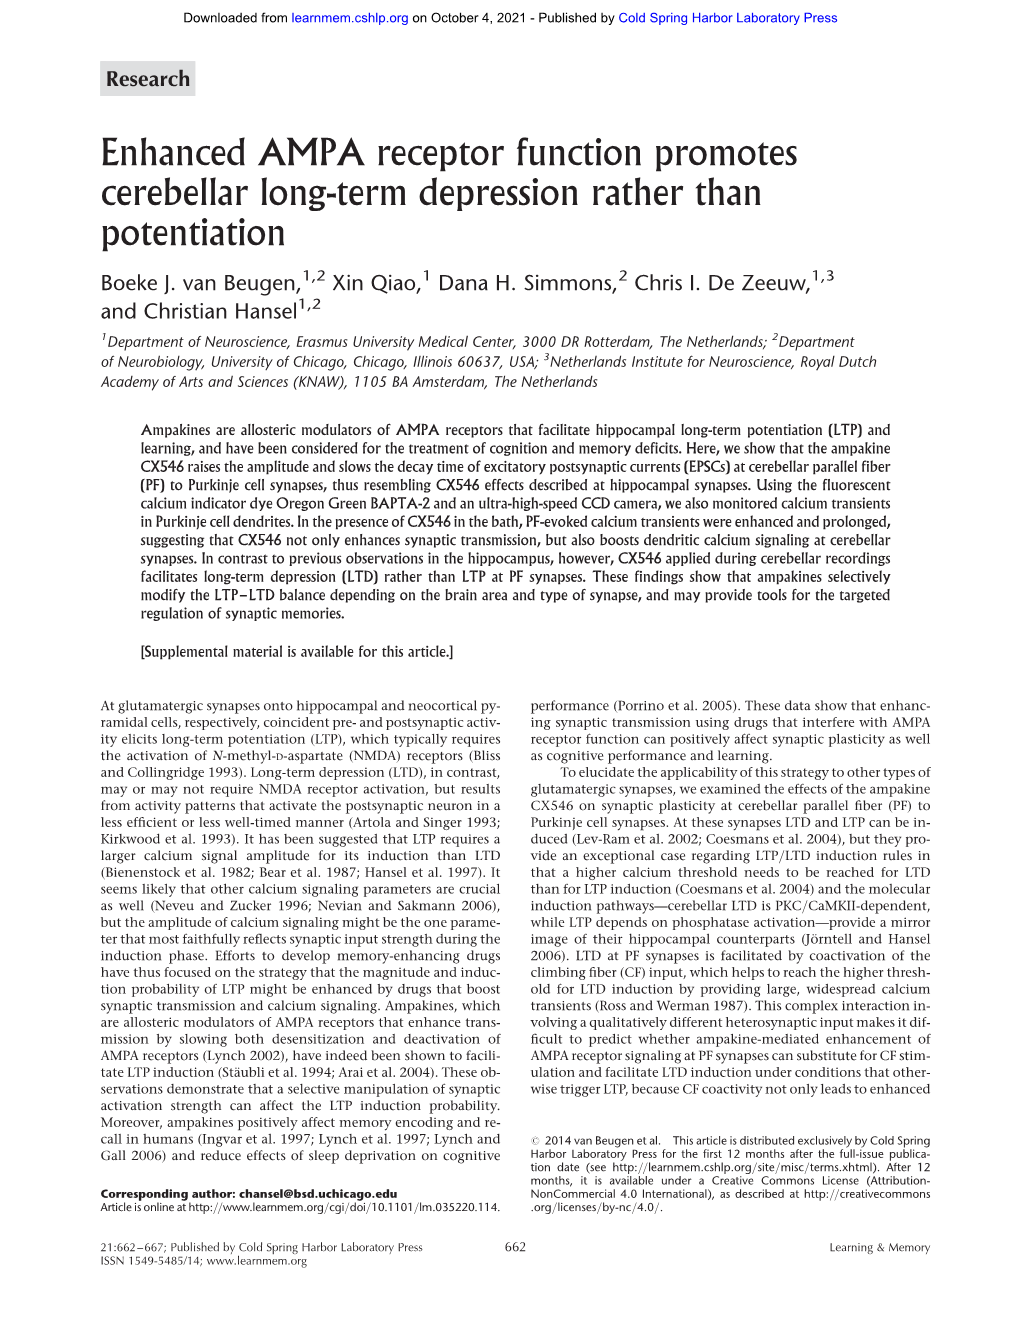 Enhanced AMPA Receptor Function Promotes Cerebellar Long-Term Depression Rather Than Potentiation